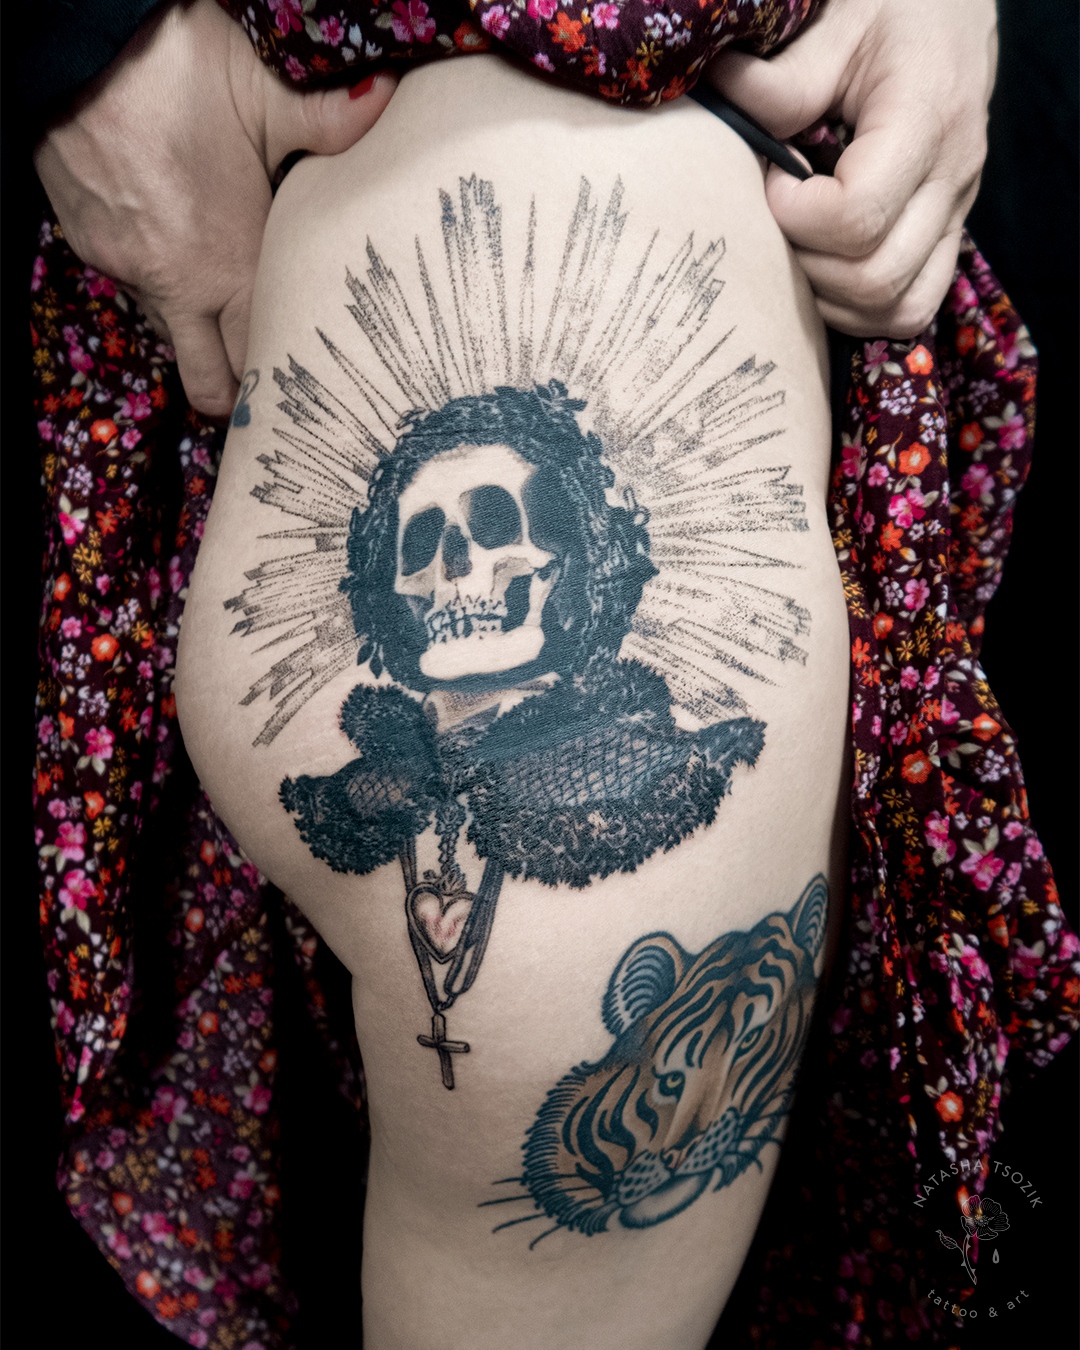 Catacomb Saint Tattoo on a thigh by Natasha Tsozik